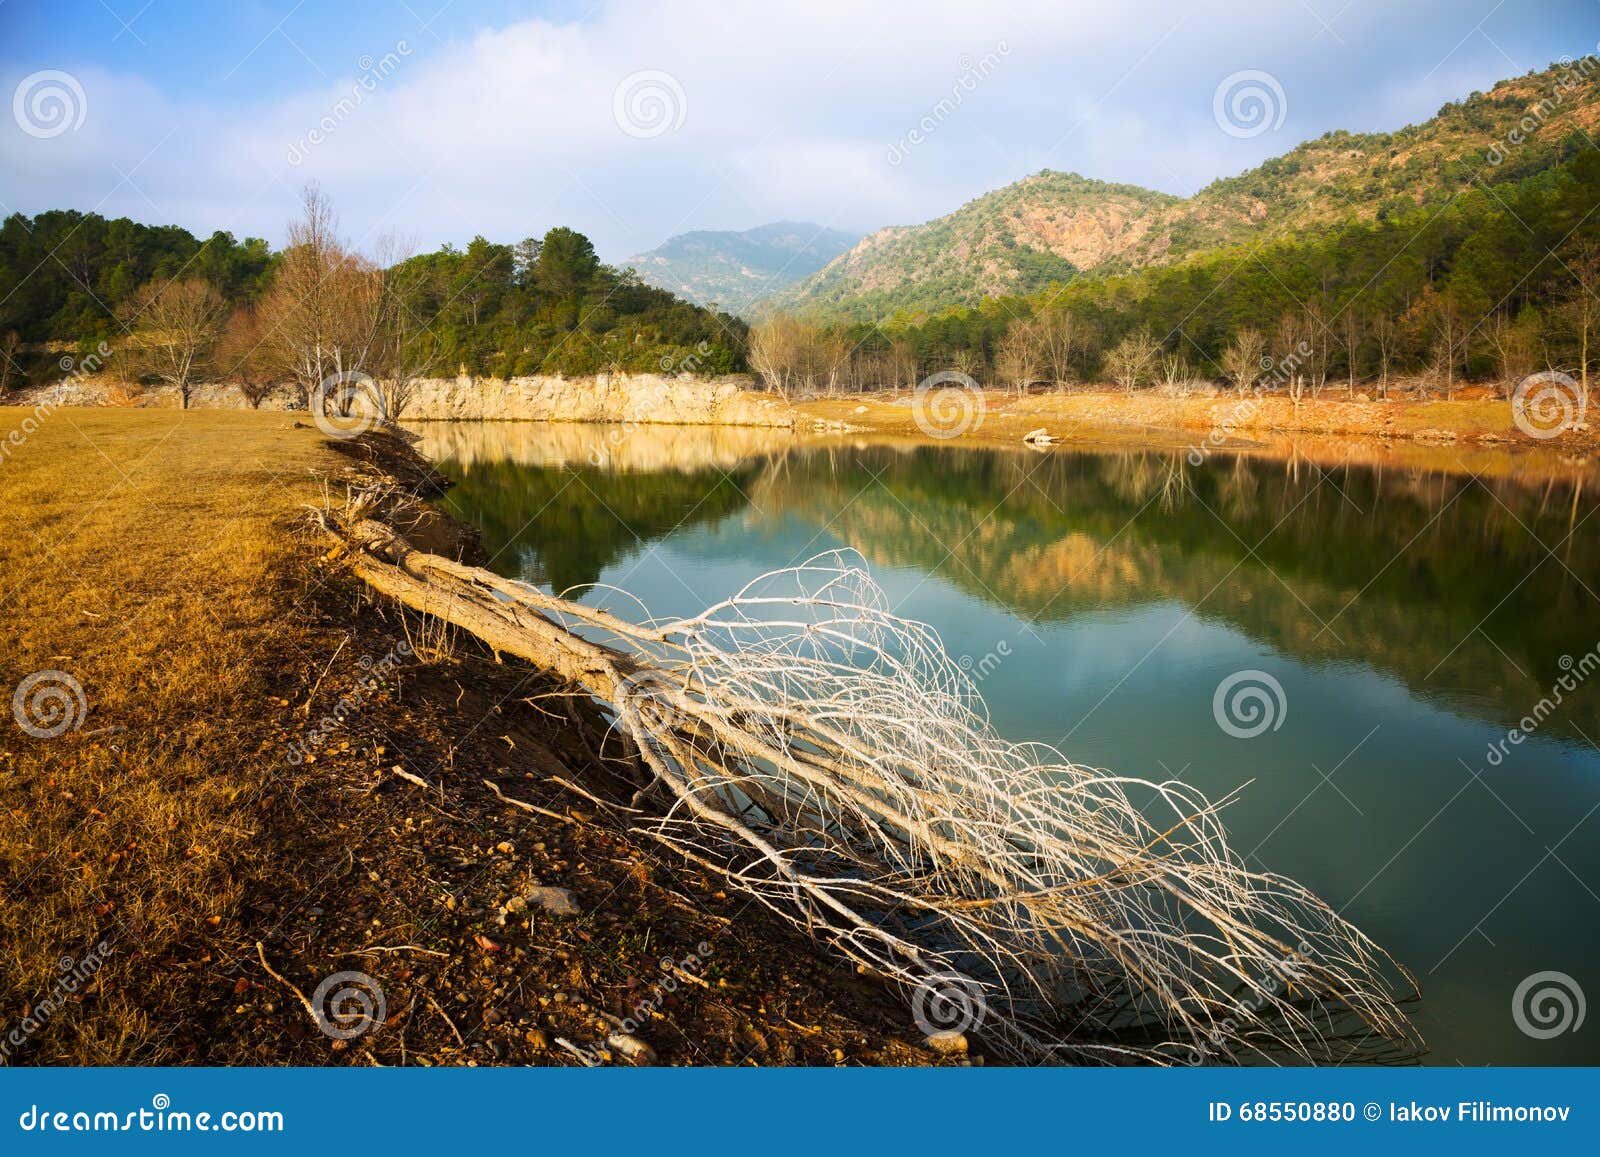 mountains river in autumn day. muga, catalan pyrenees